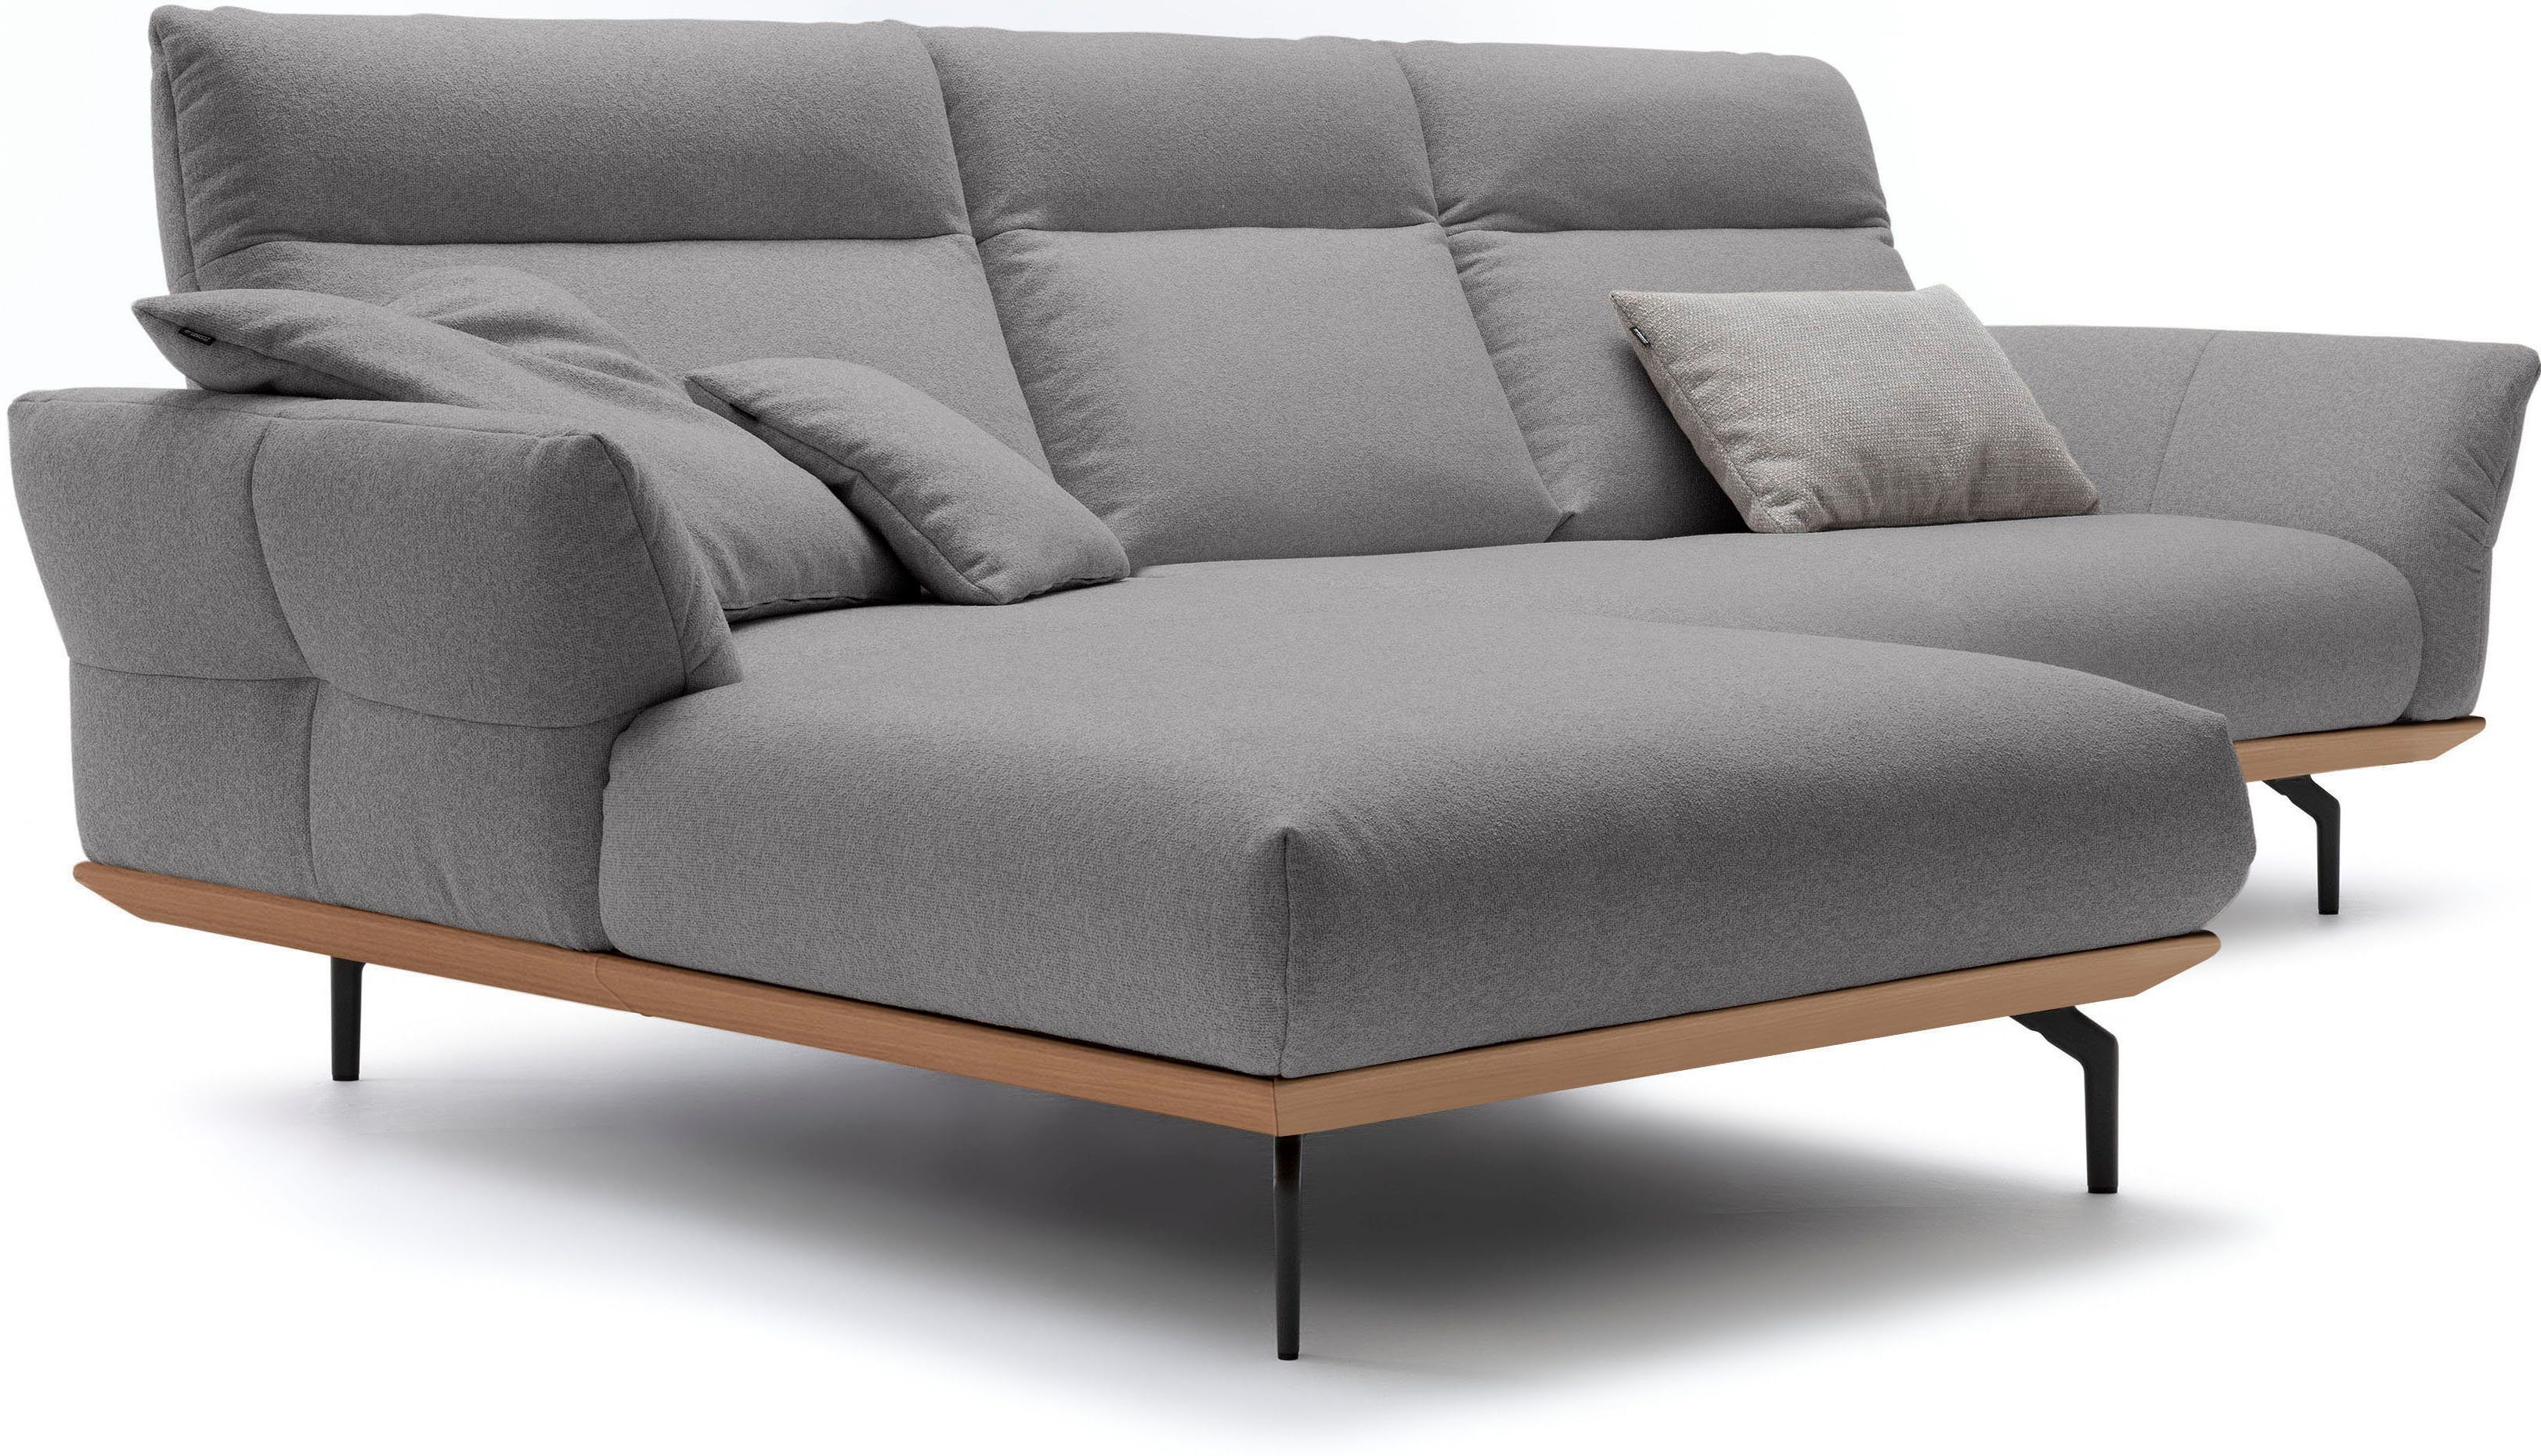 sofa hülsta in Breite Alugussfüße hs.460, cm Sockel umbragrau, 298 Eiche, in Ecksofa